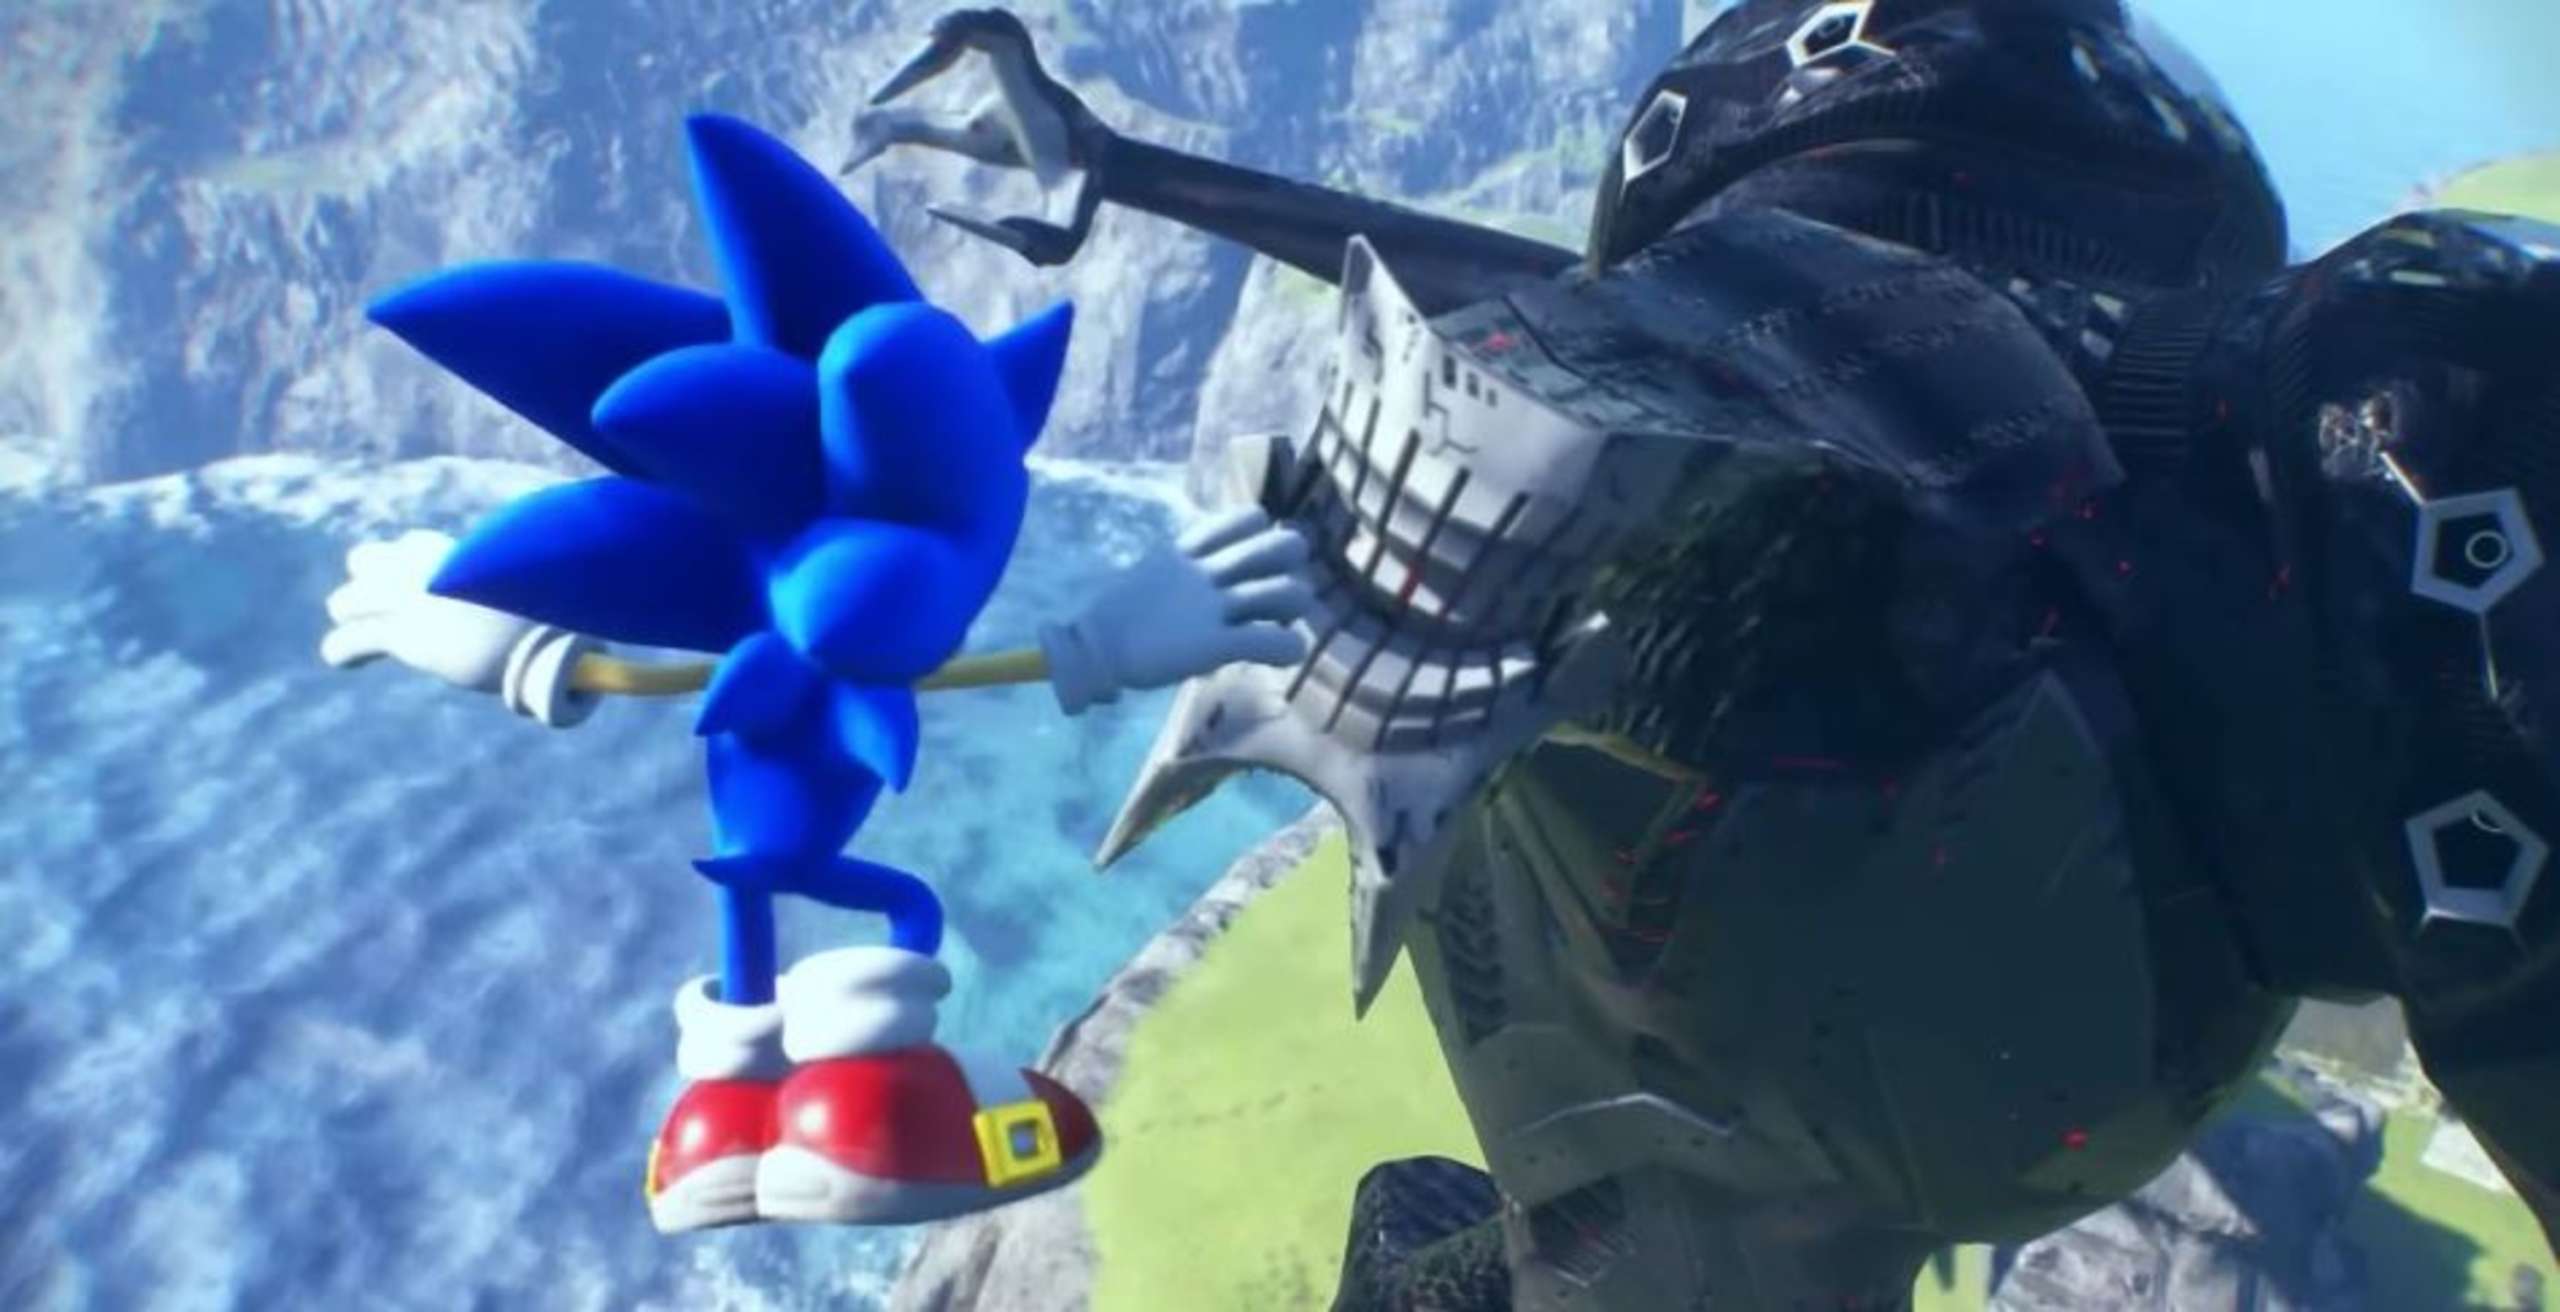 Kingdom Hearts III Fan Makes Stylish Sonic Frontiers-Inspired